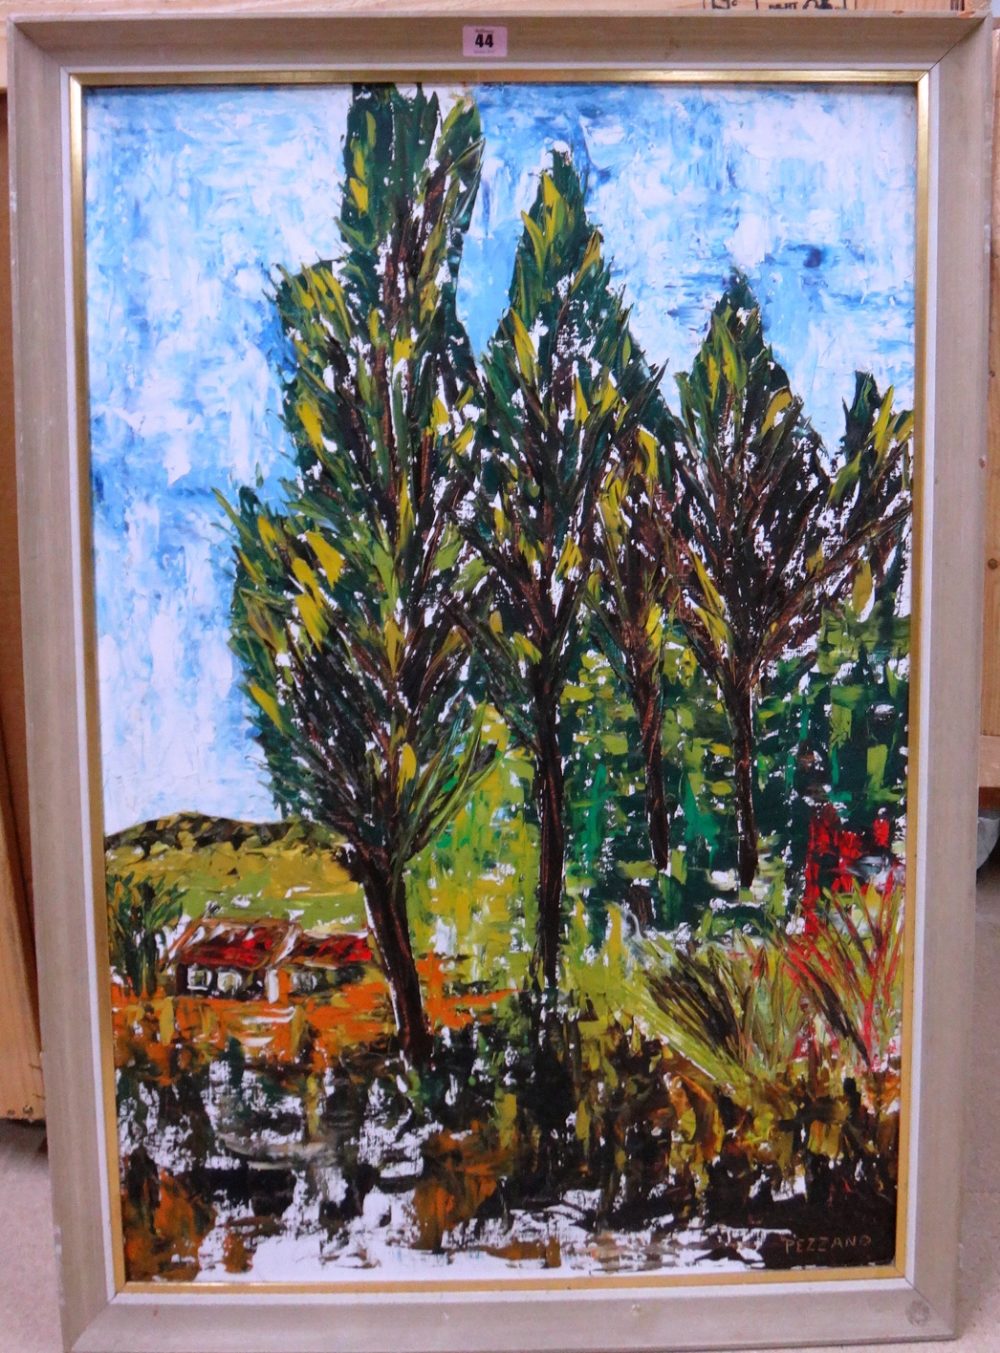 ** Pezzano (20th century), Trees in a landscape, oil on board, signed, 91cm x 60cm.